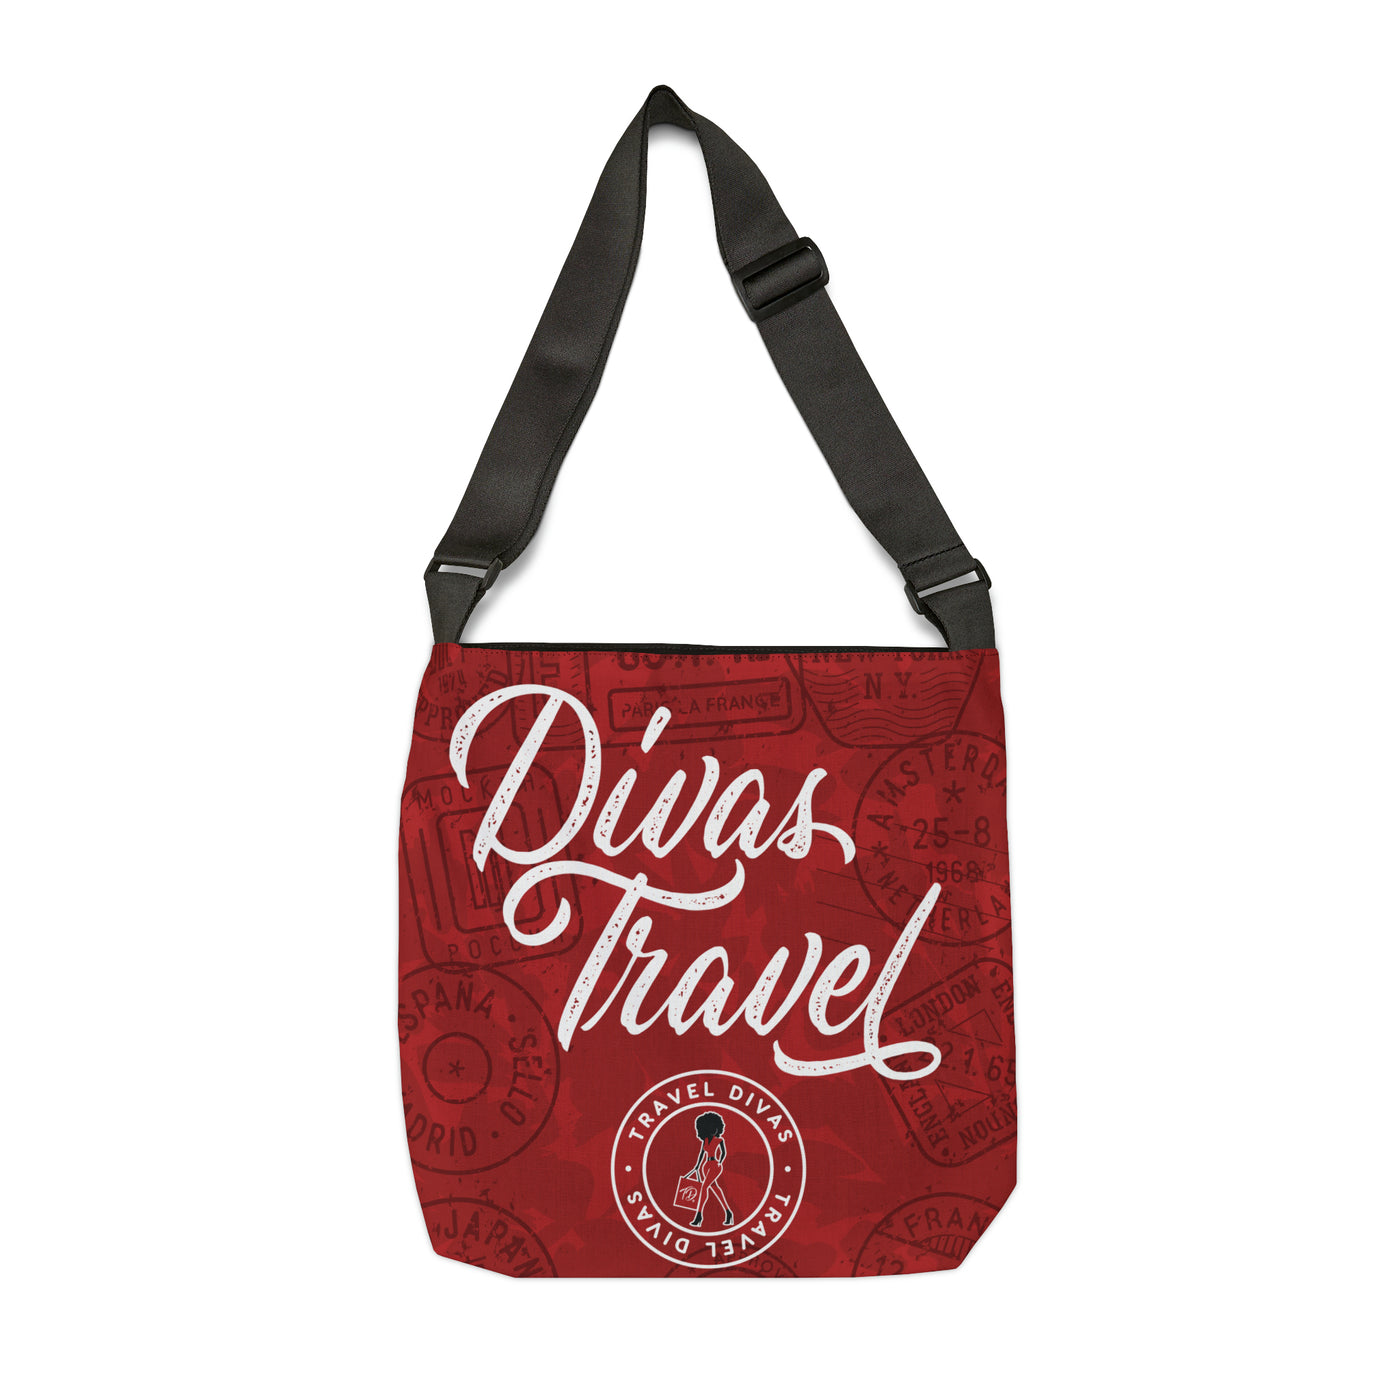 Divas Travel Adjustable Large Crossbody/Tote Bag